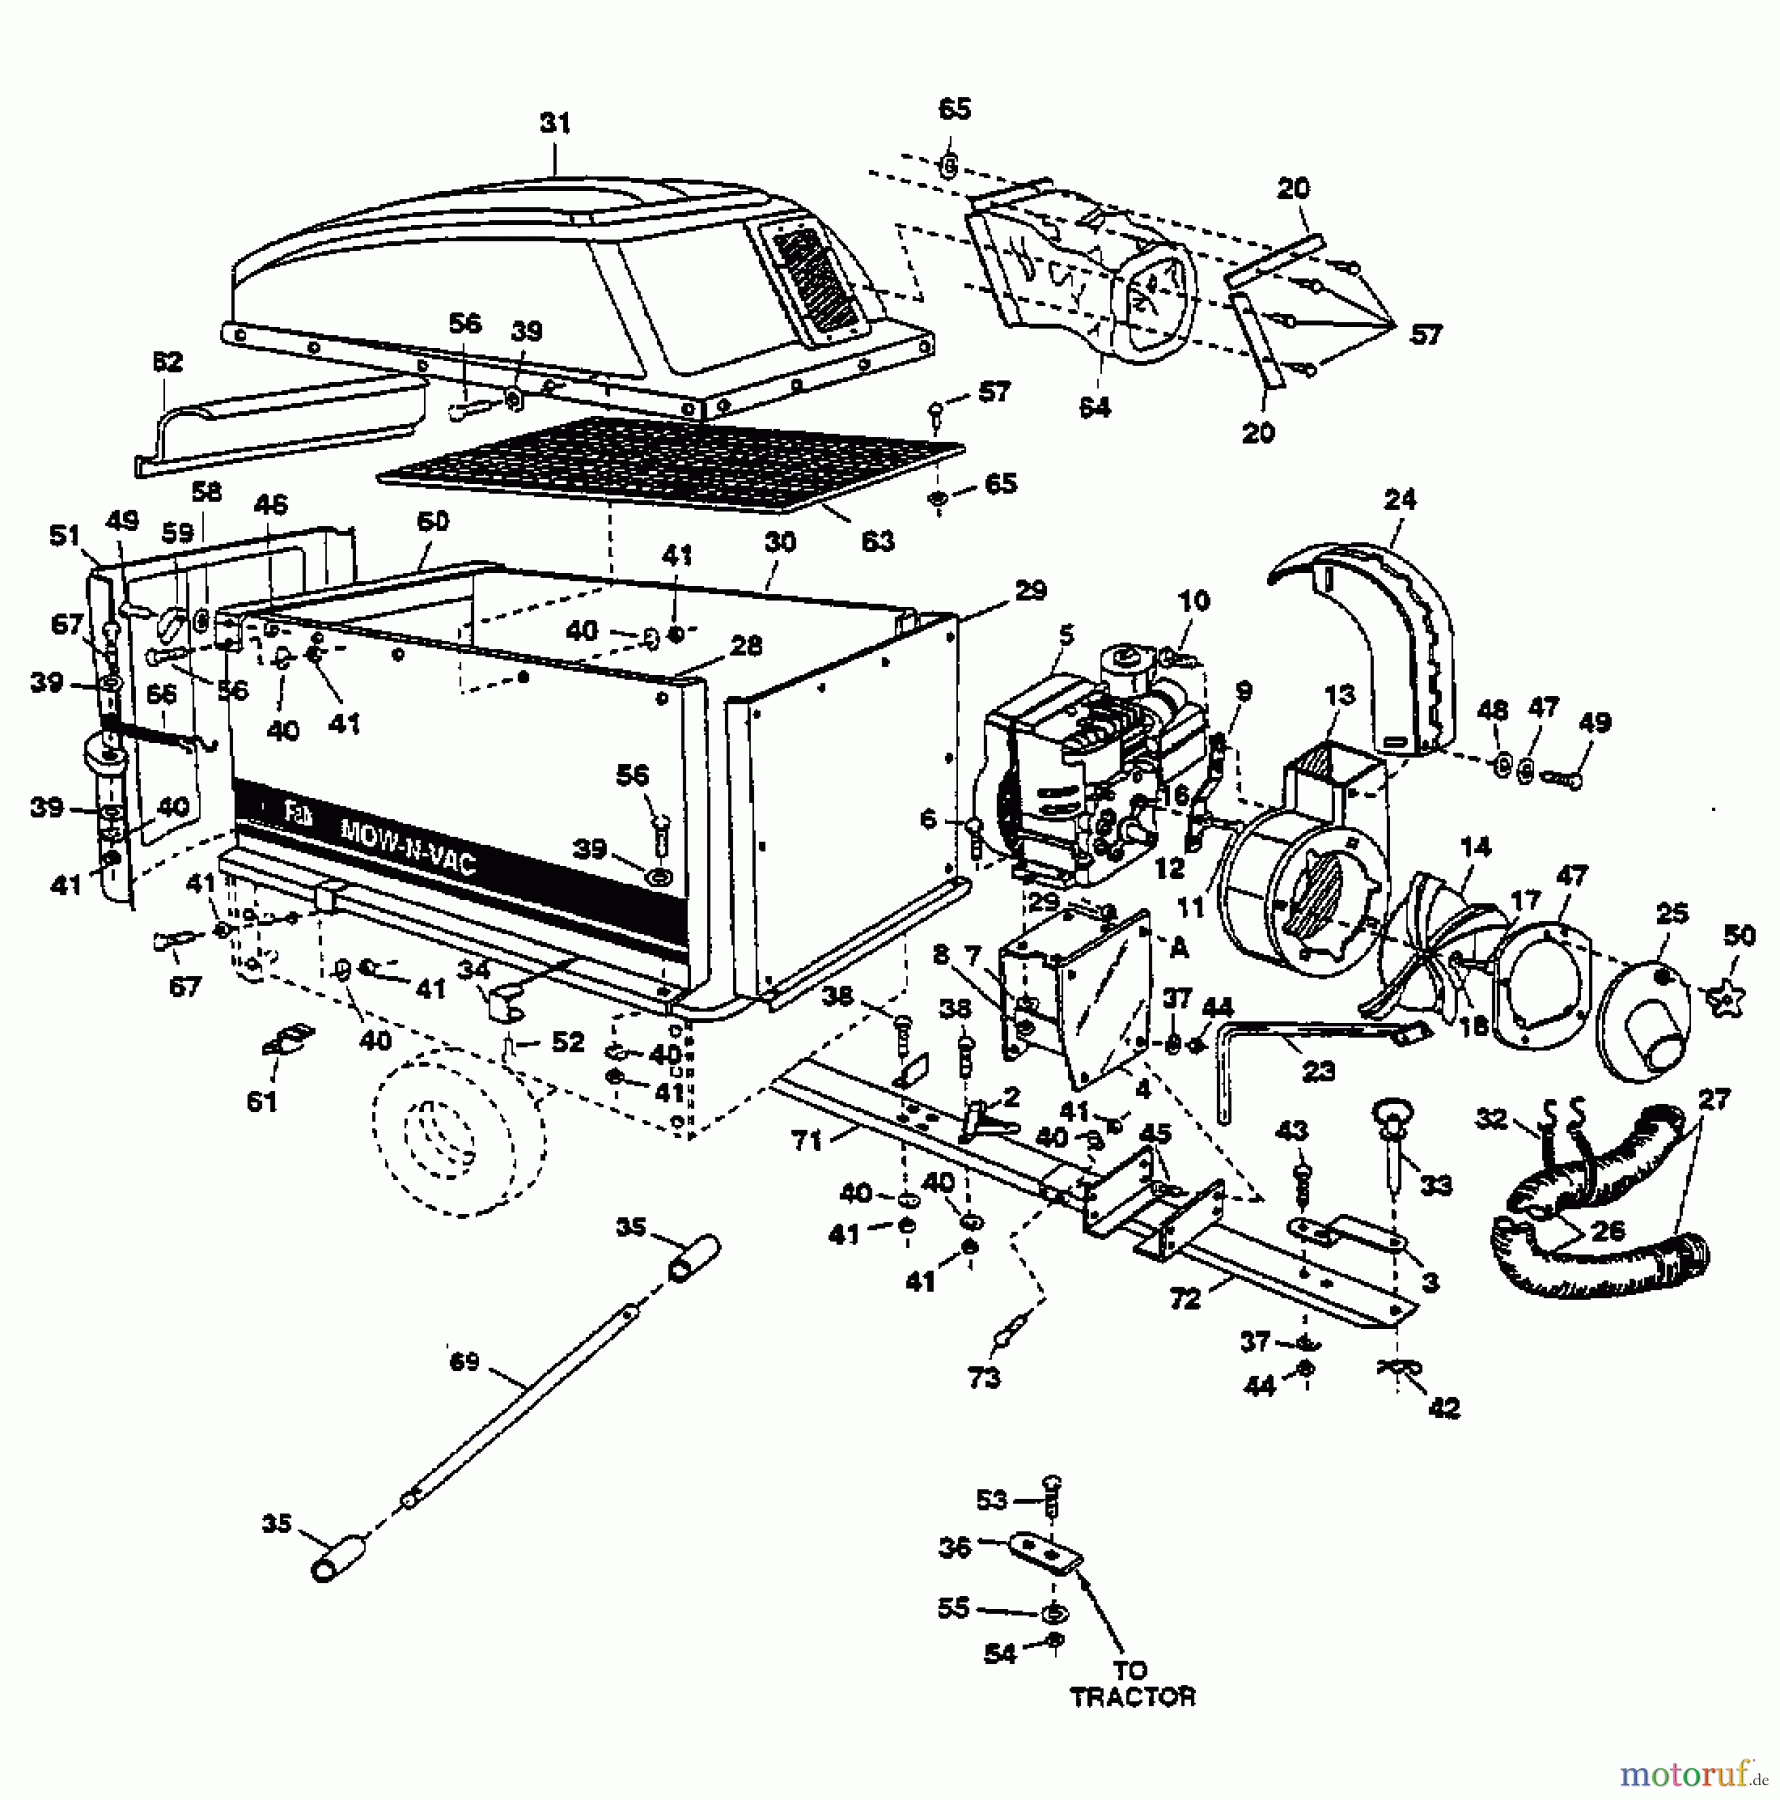  MTD Accessories Accessories garden and lawn tractors Blower Mow-Vac 190-518-000  (1999) Basic machine